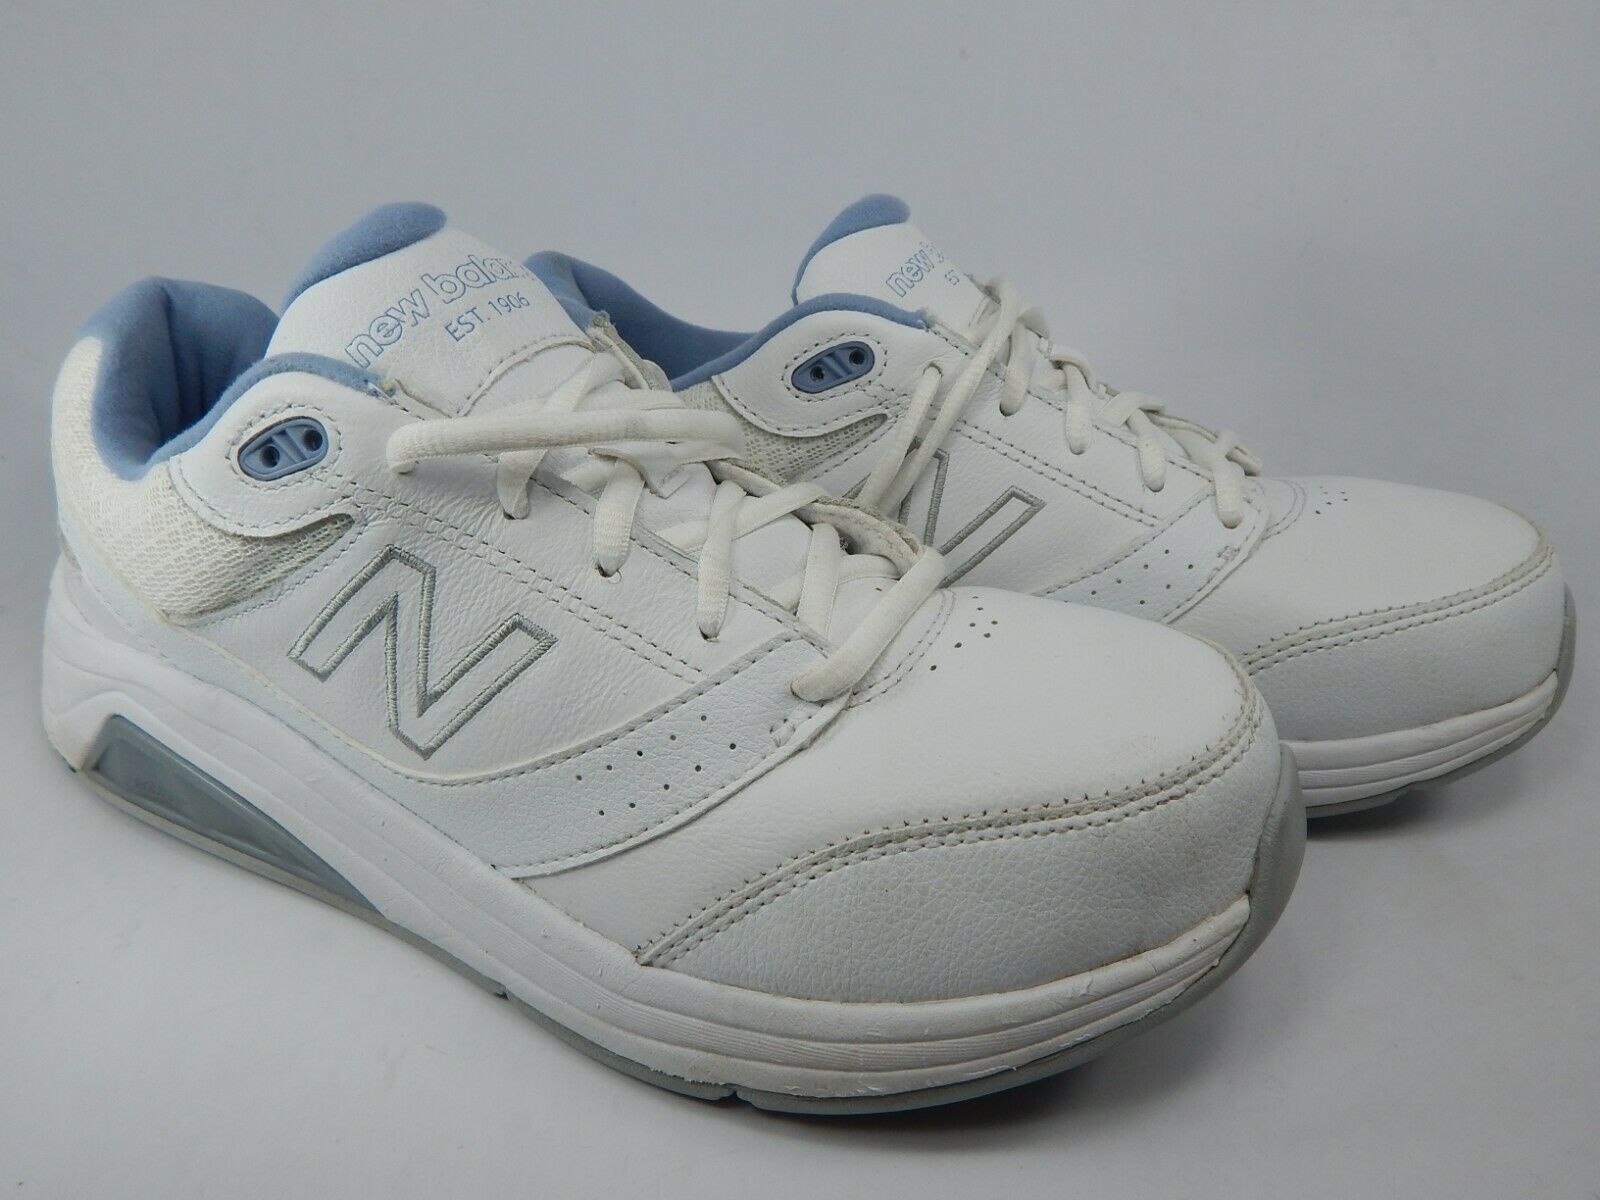 New Balance 928 v3 Size US 9.5 M (B) EU 41 Women's Walking Shoes White ...